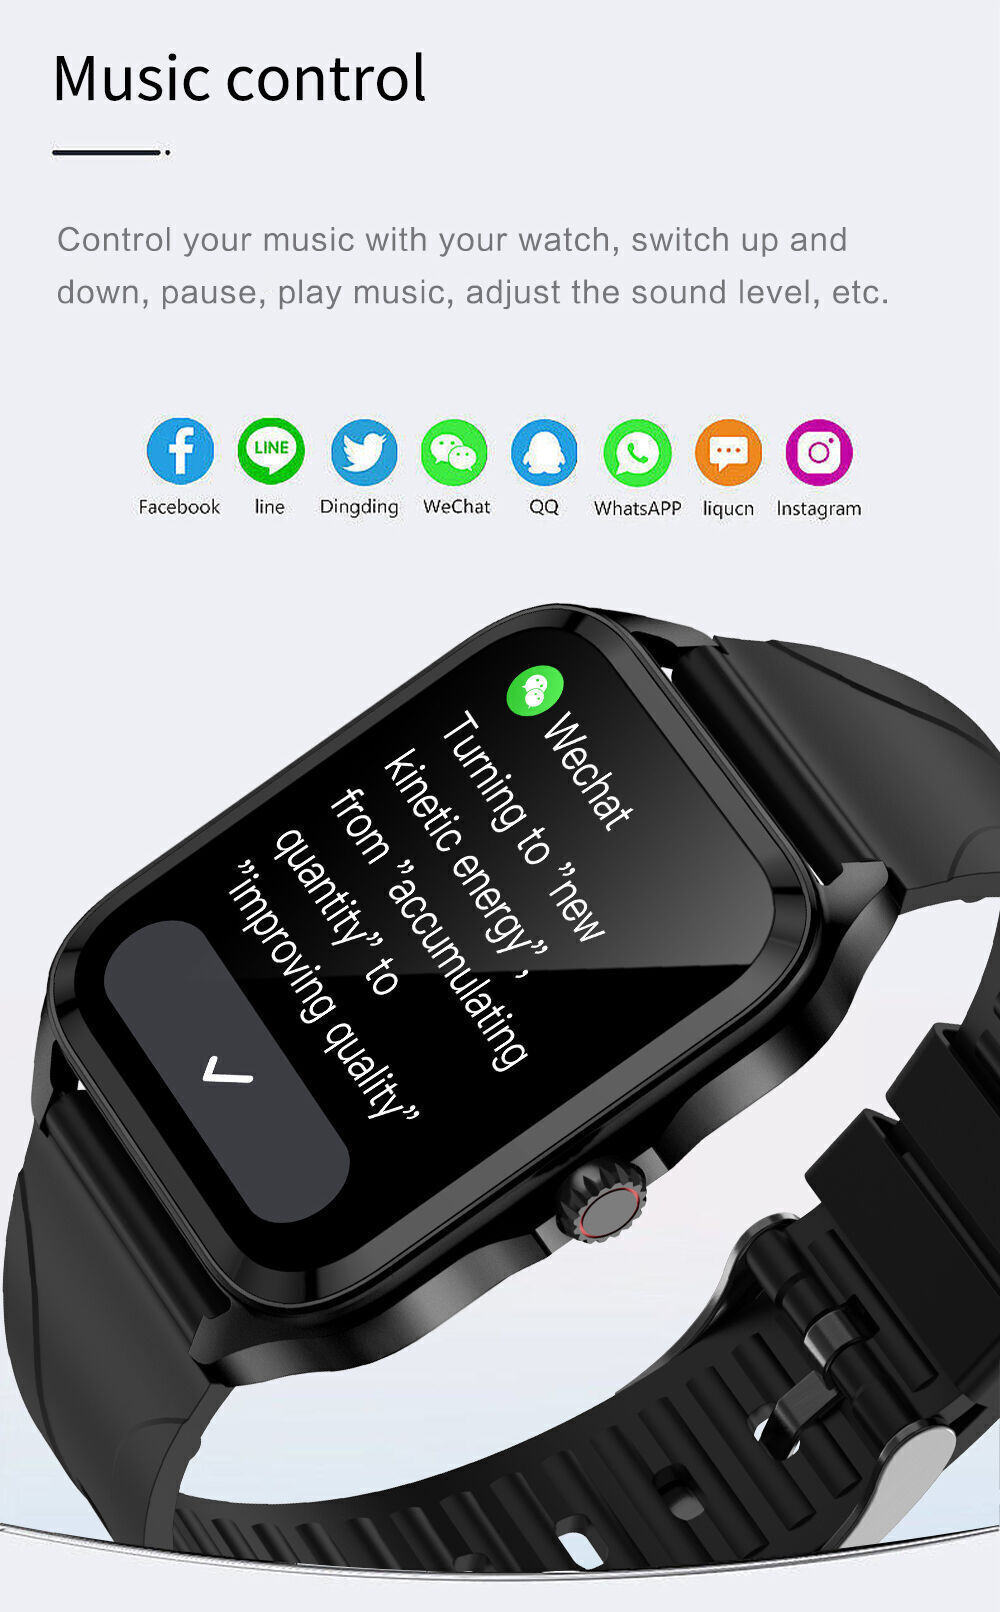 Reloj Inteligente Mujer - 1,83 Smartwatch Mujer con Llamada  Bluetooth,Reloj Deportivo Impermeable IP68,Notificacion Whatsapp,Asistente